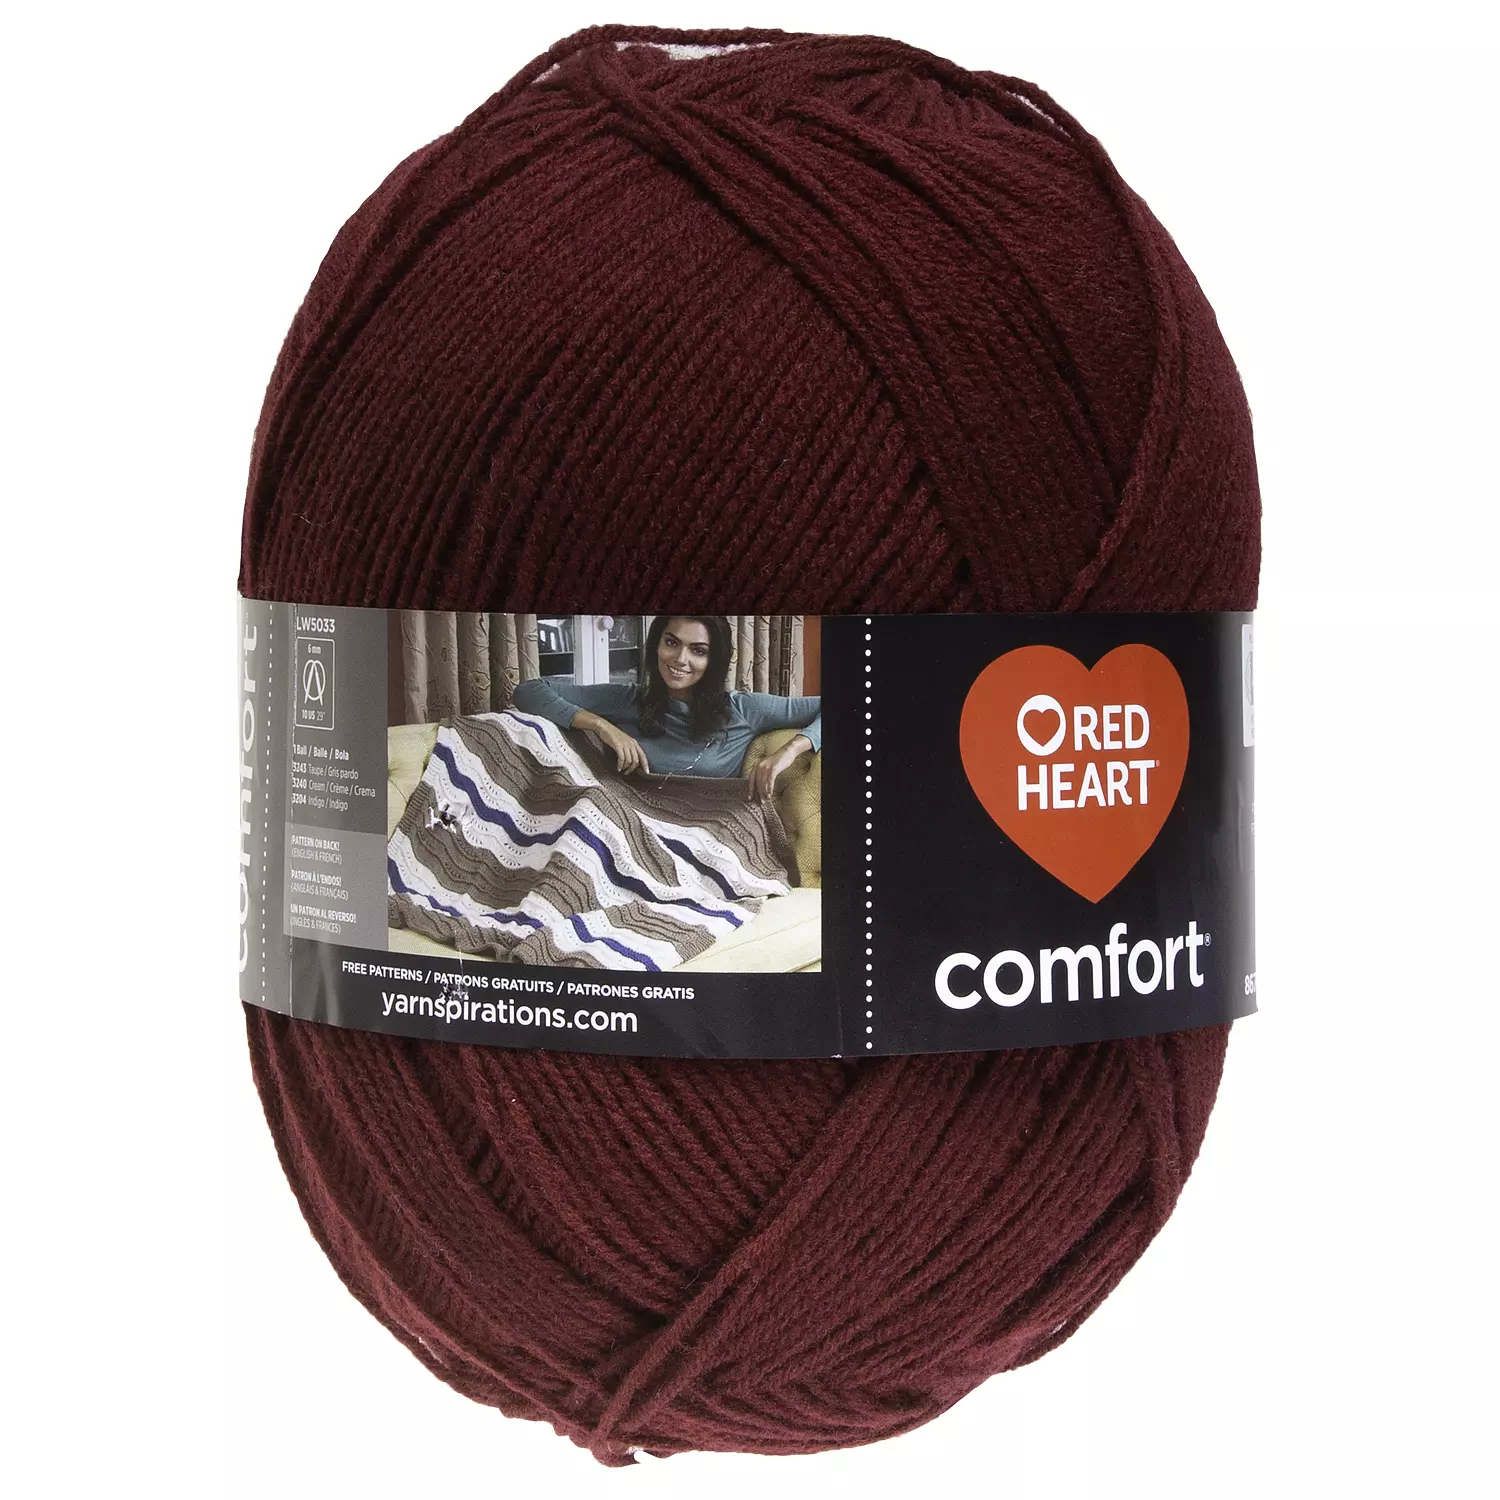 Red Heart Comfort - Yarn, claret